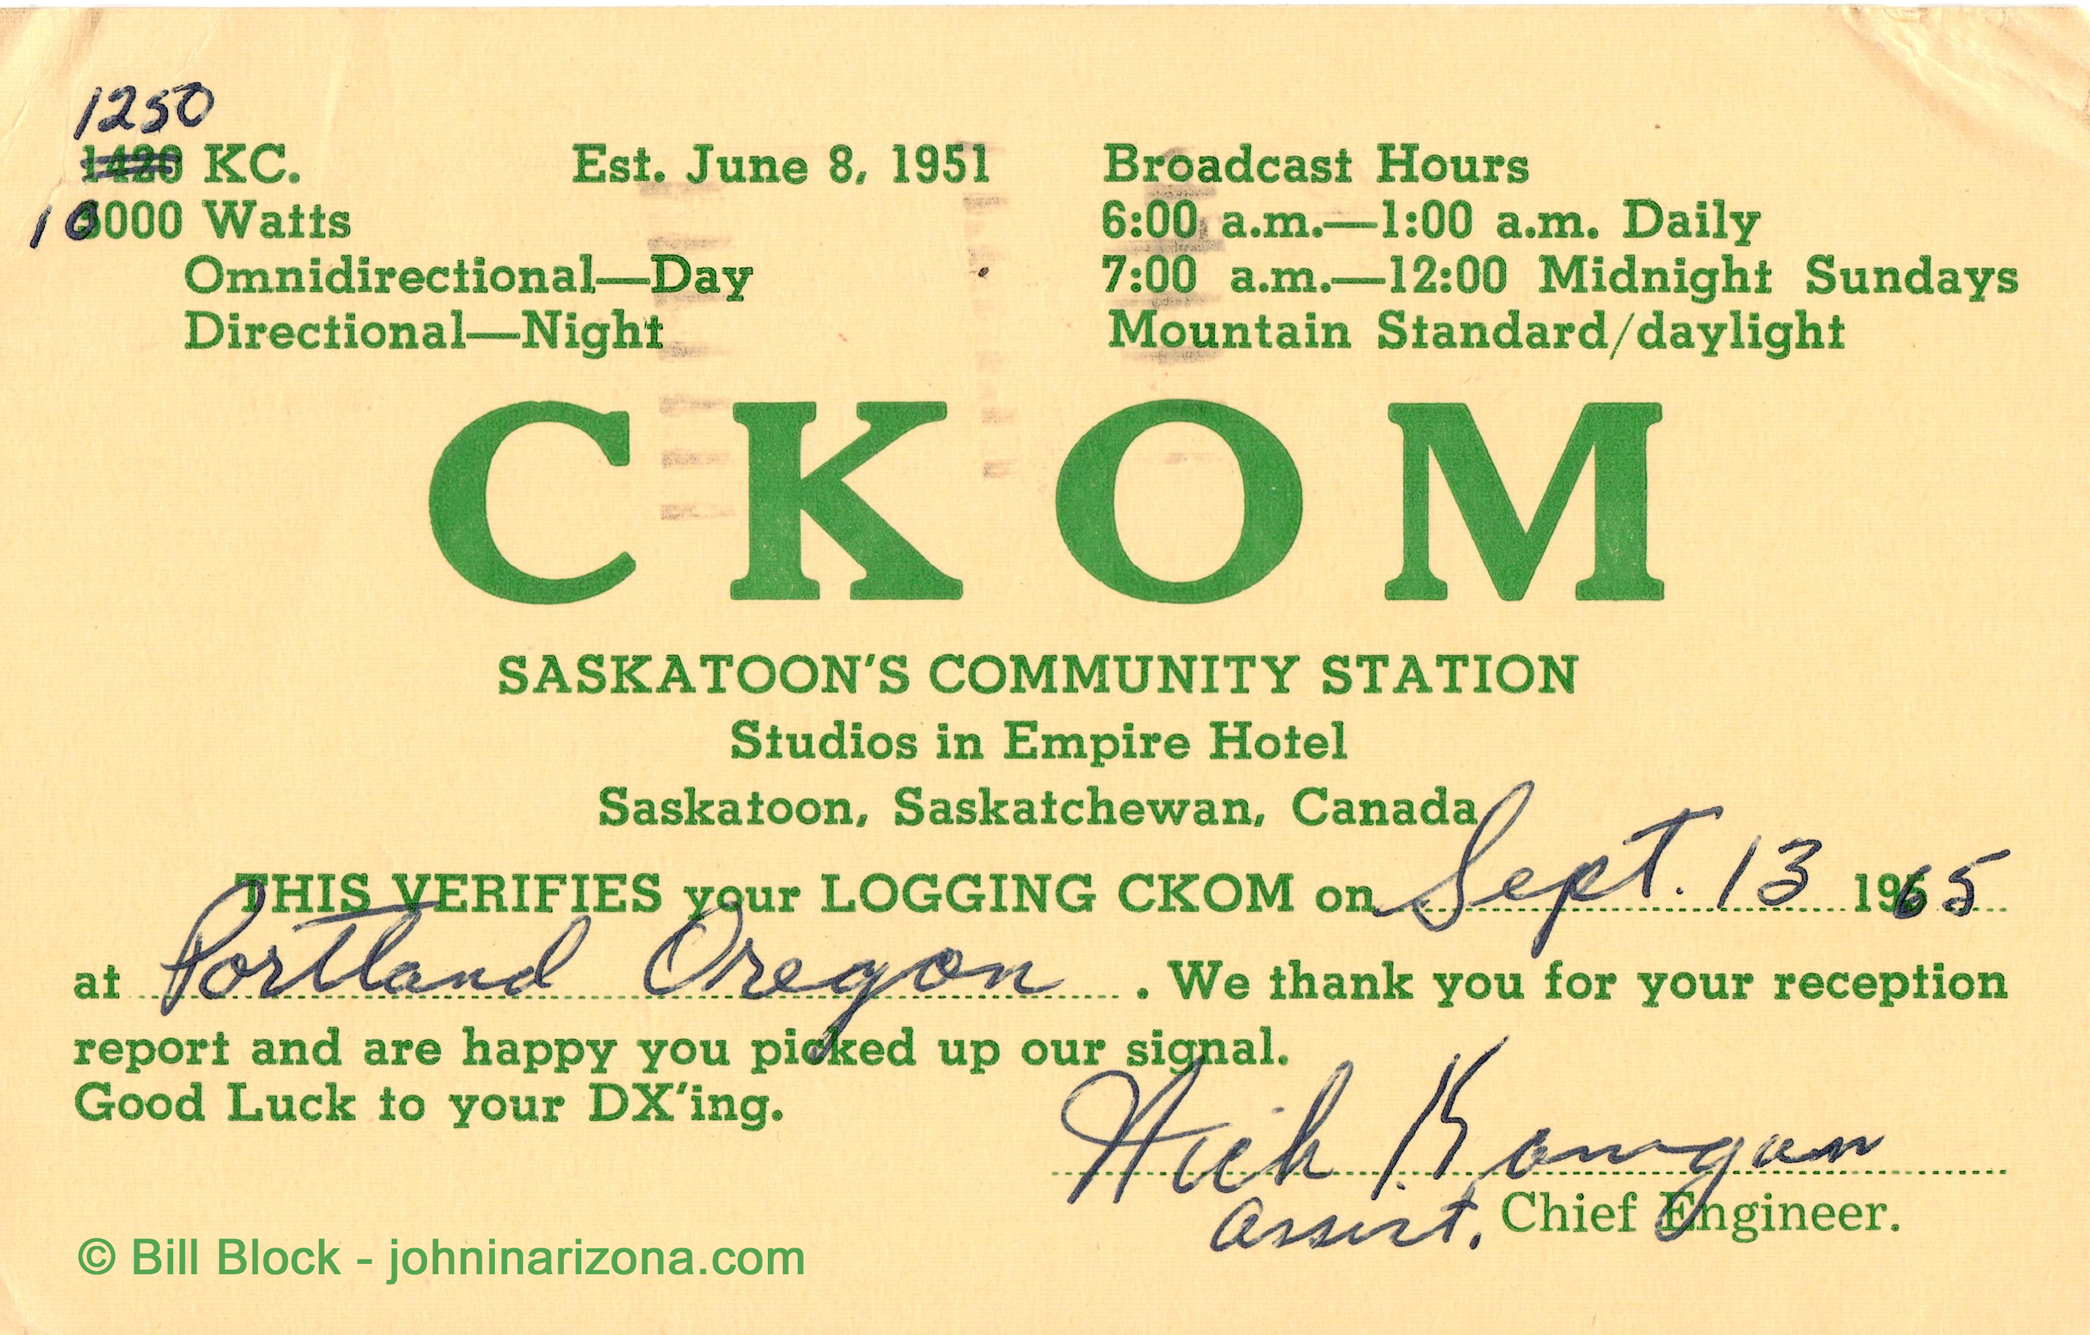 CKOM Radio 1250 Saskatoon, Saskatchewan